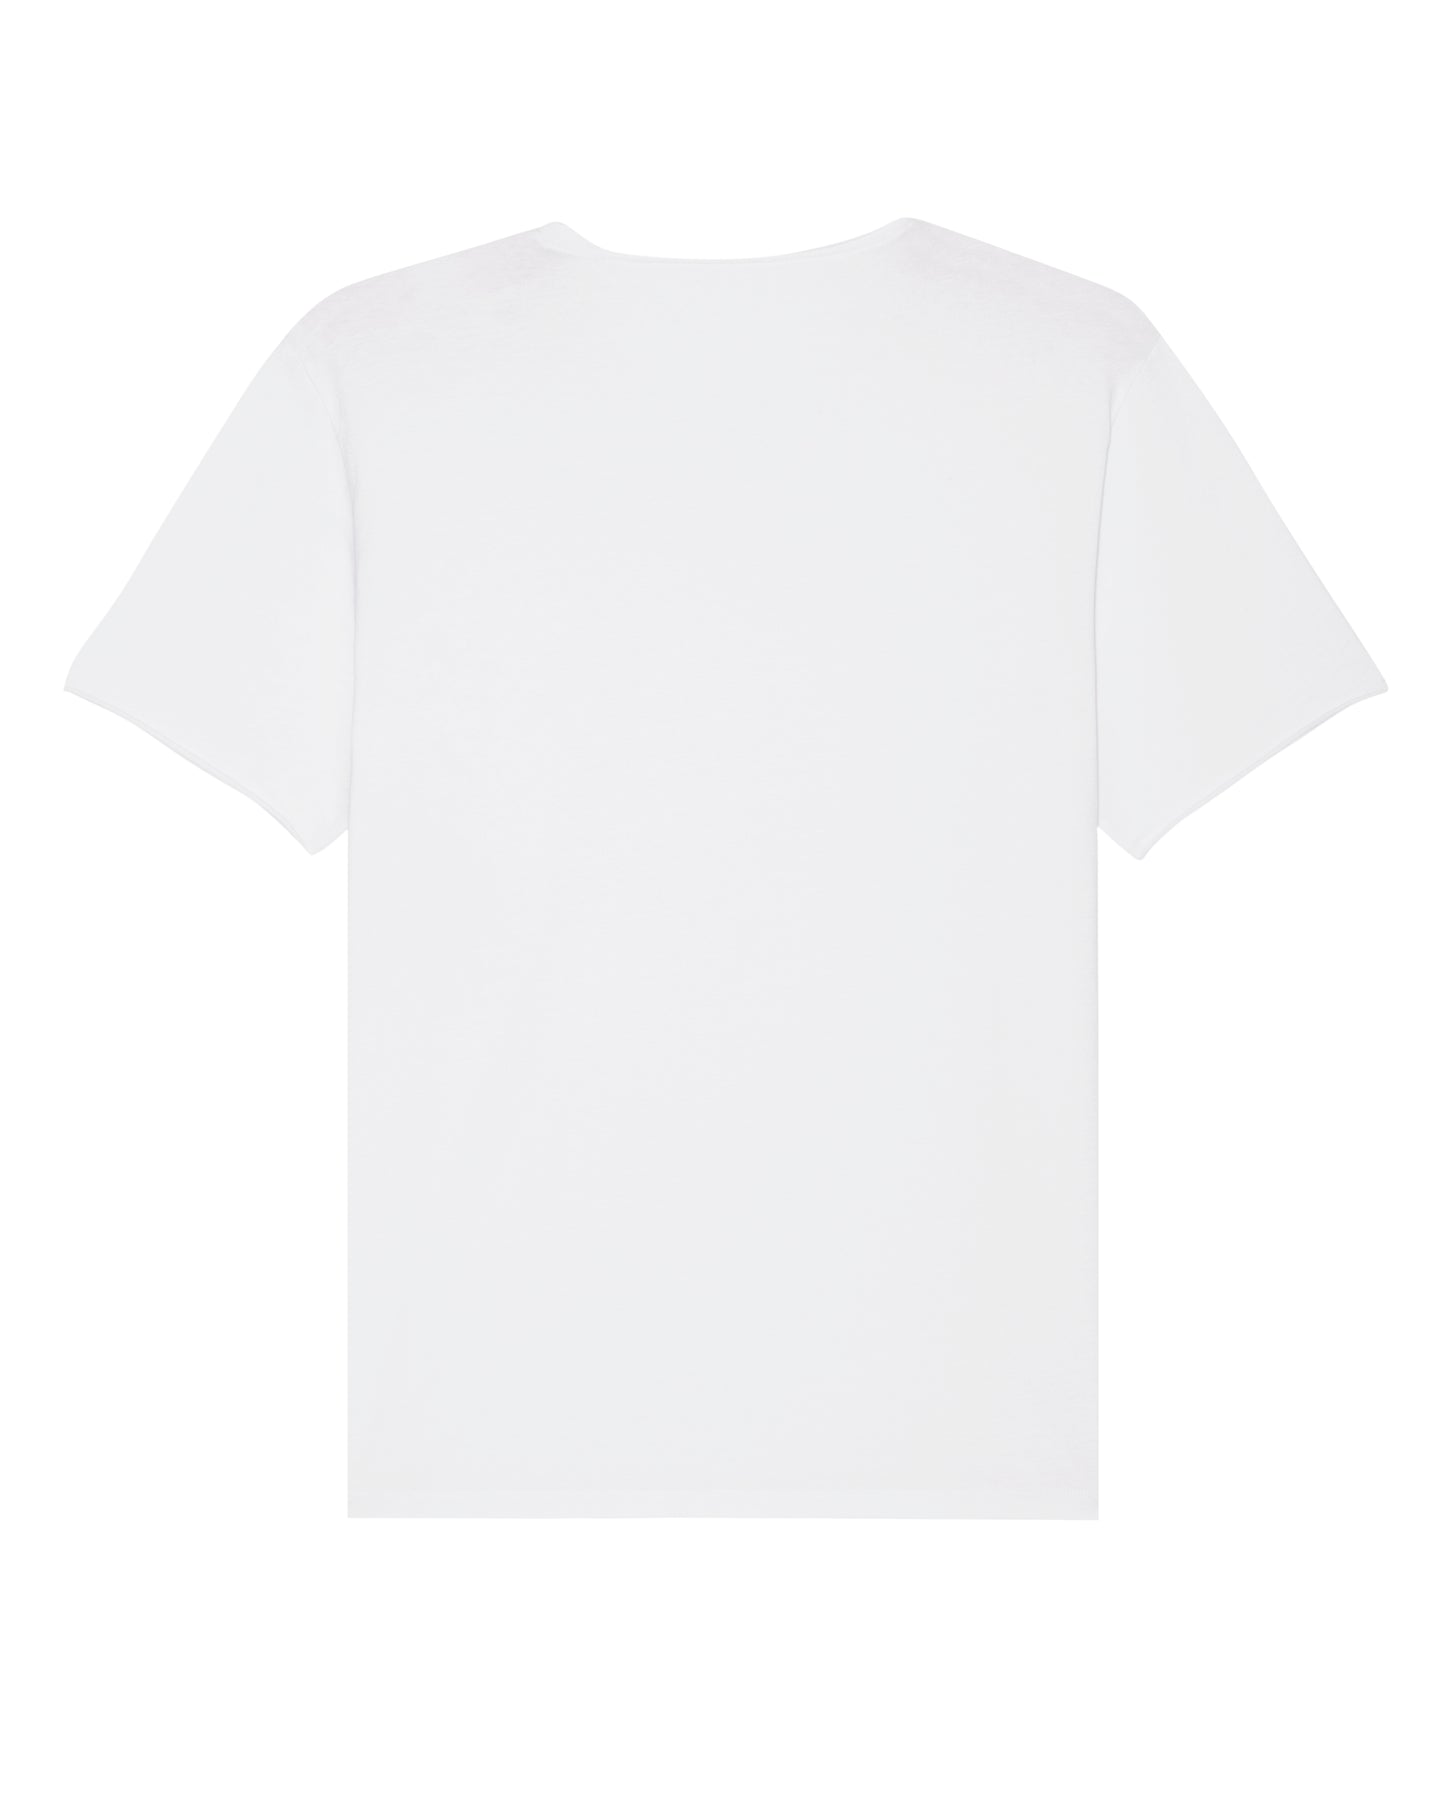 Hang Ten Raw Surfer T-shirt - White